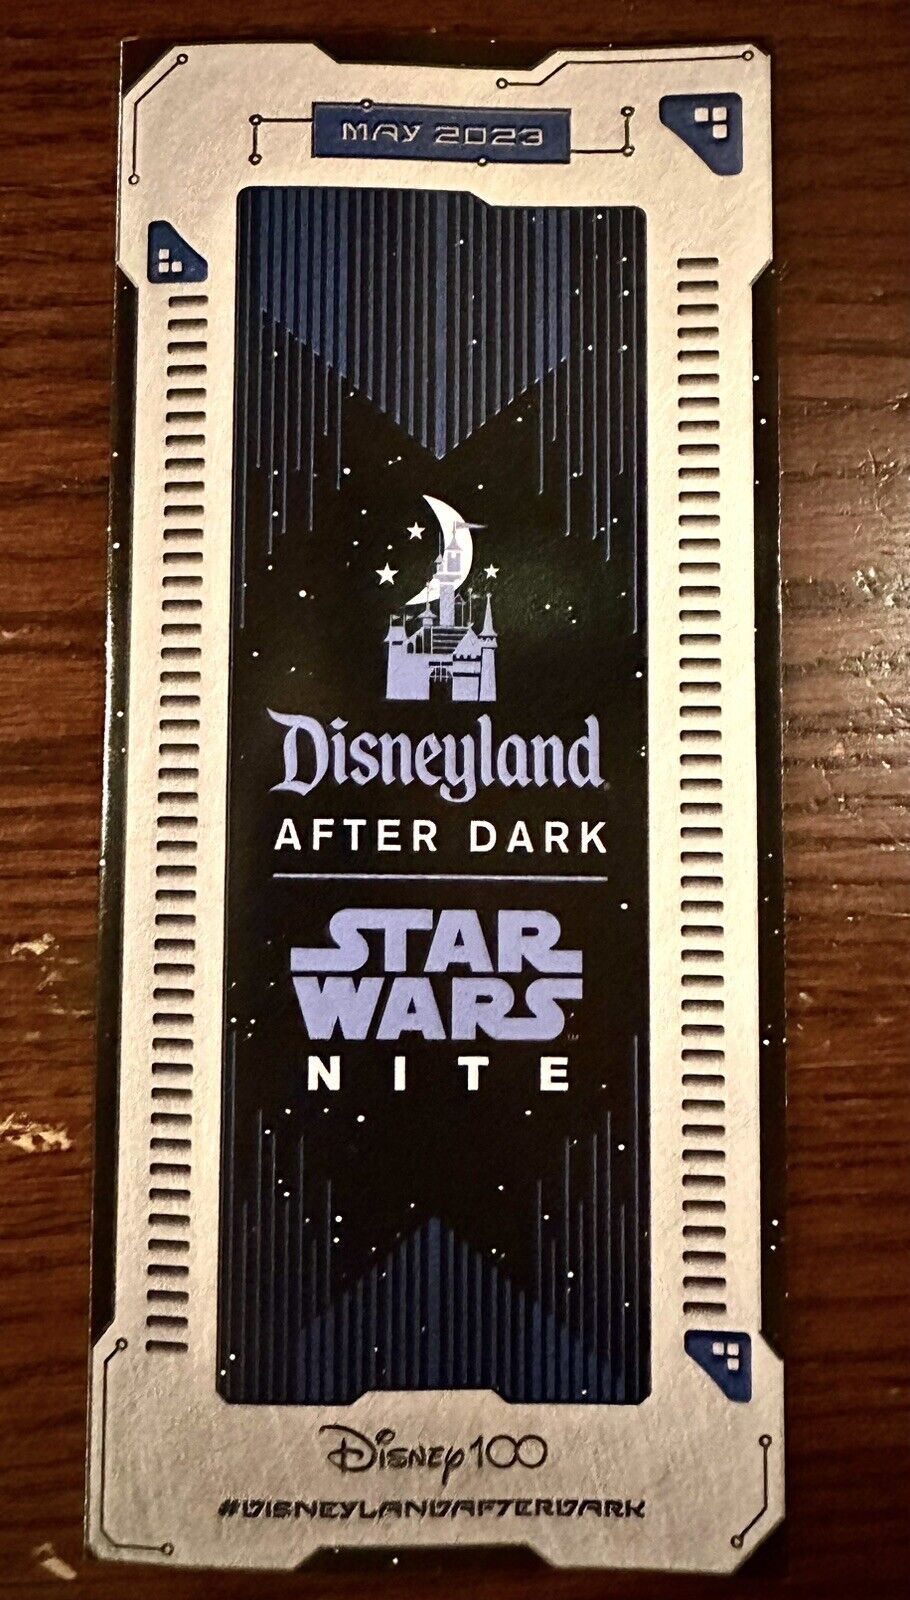 Disneyland After Dark Star Wars Nite 2023 Guide and Map Disney 100